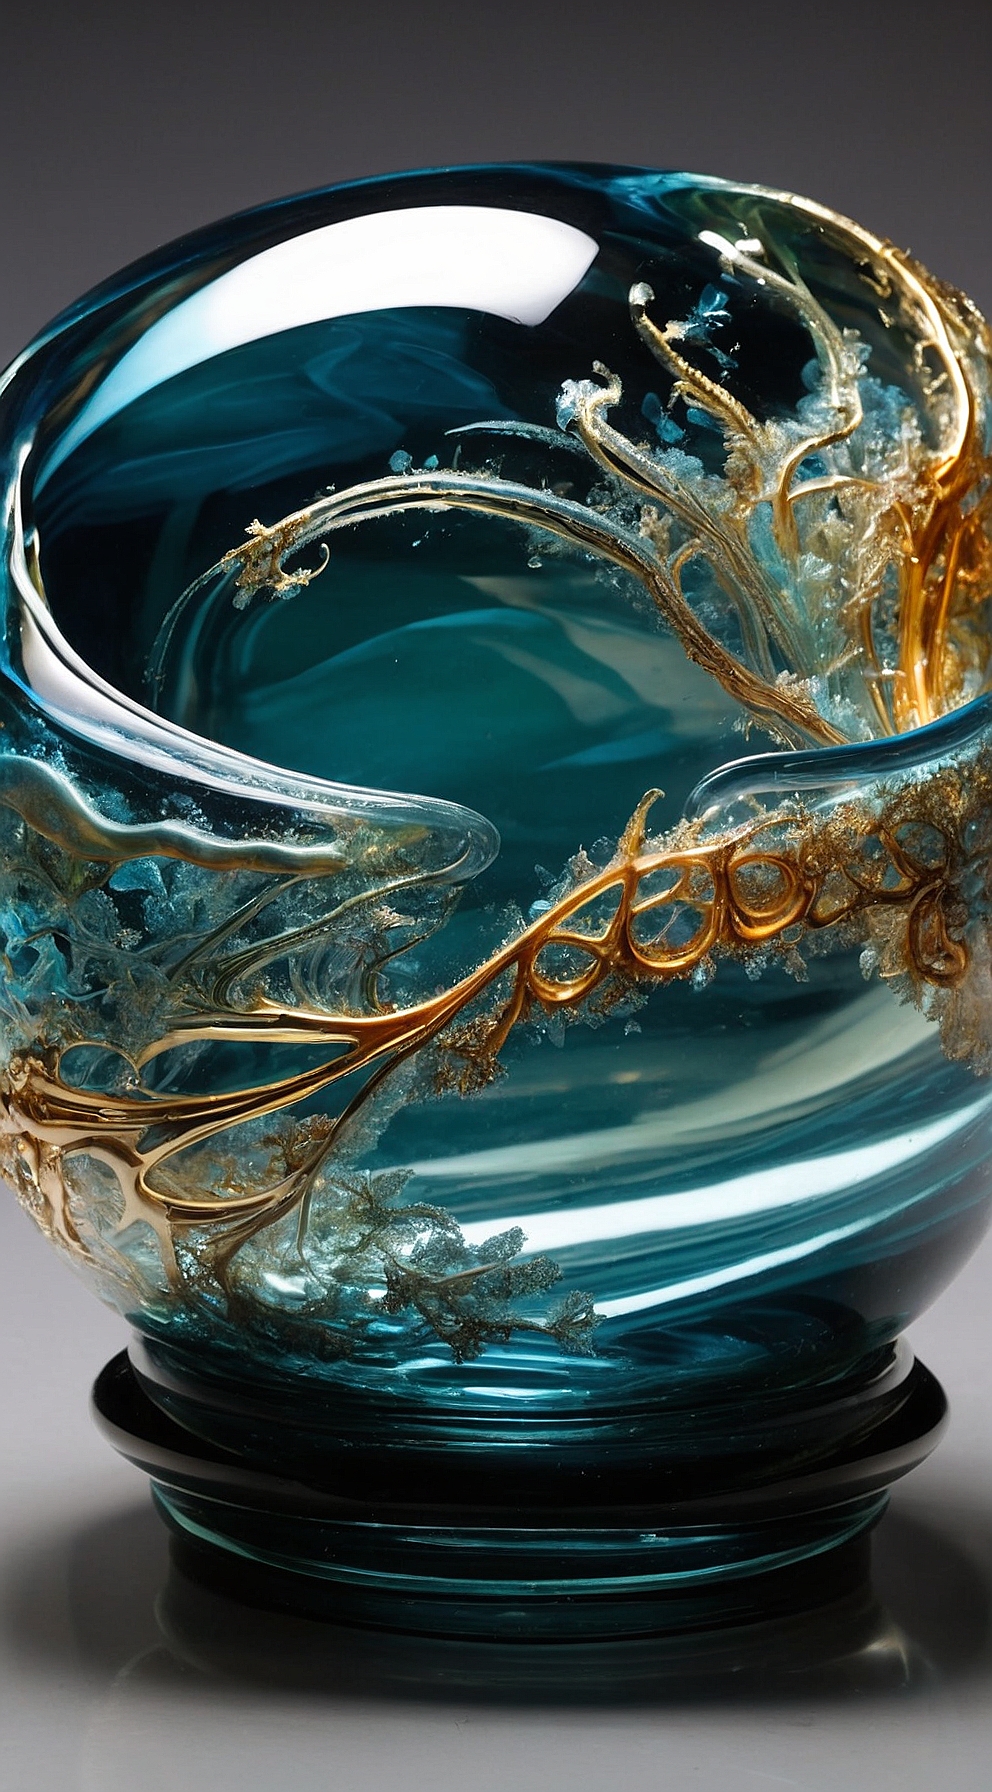 Default masterpiece glass art Menger sponge design spiral patt 6